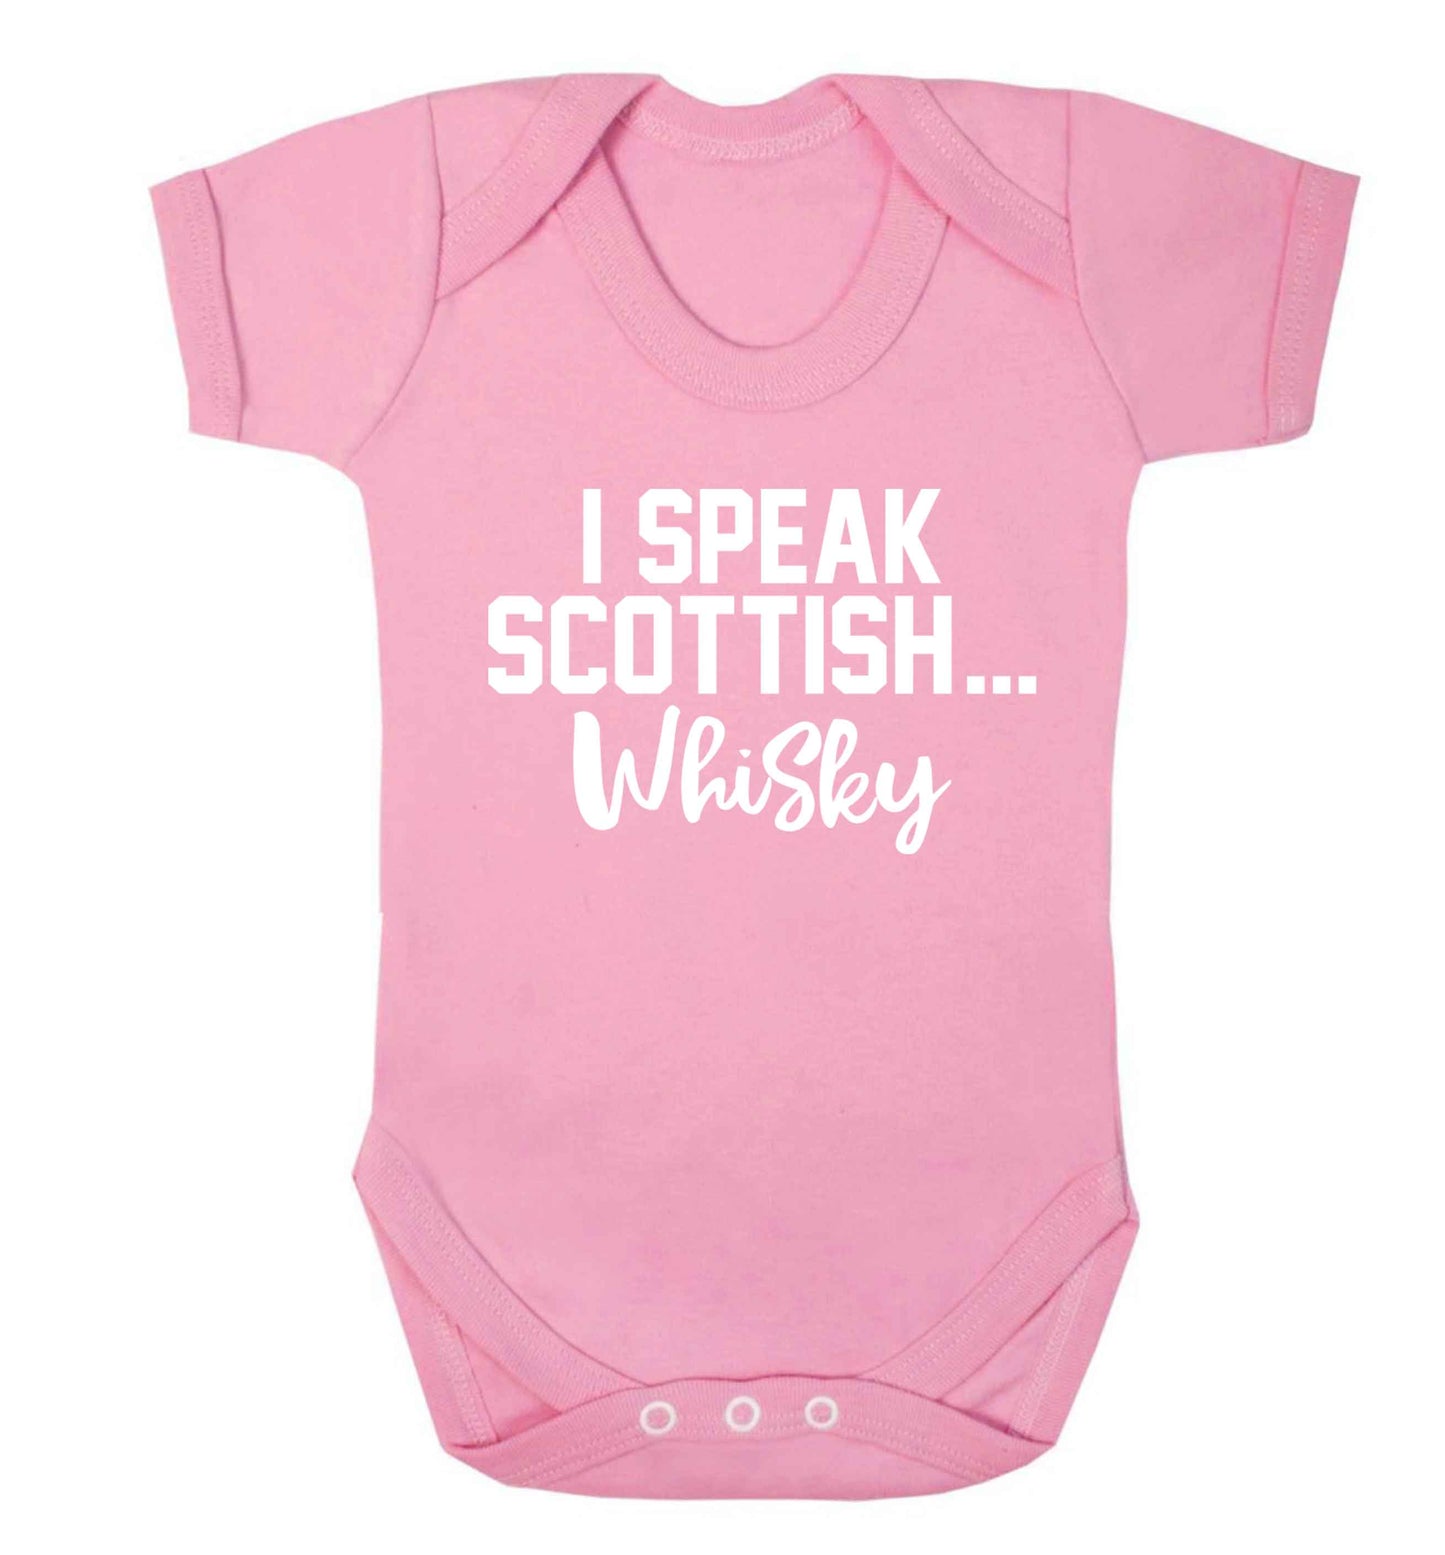 I speak scottish...whisky Baby Vest pale pink 18-24 months